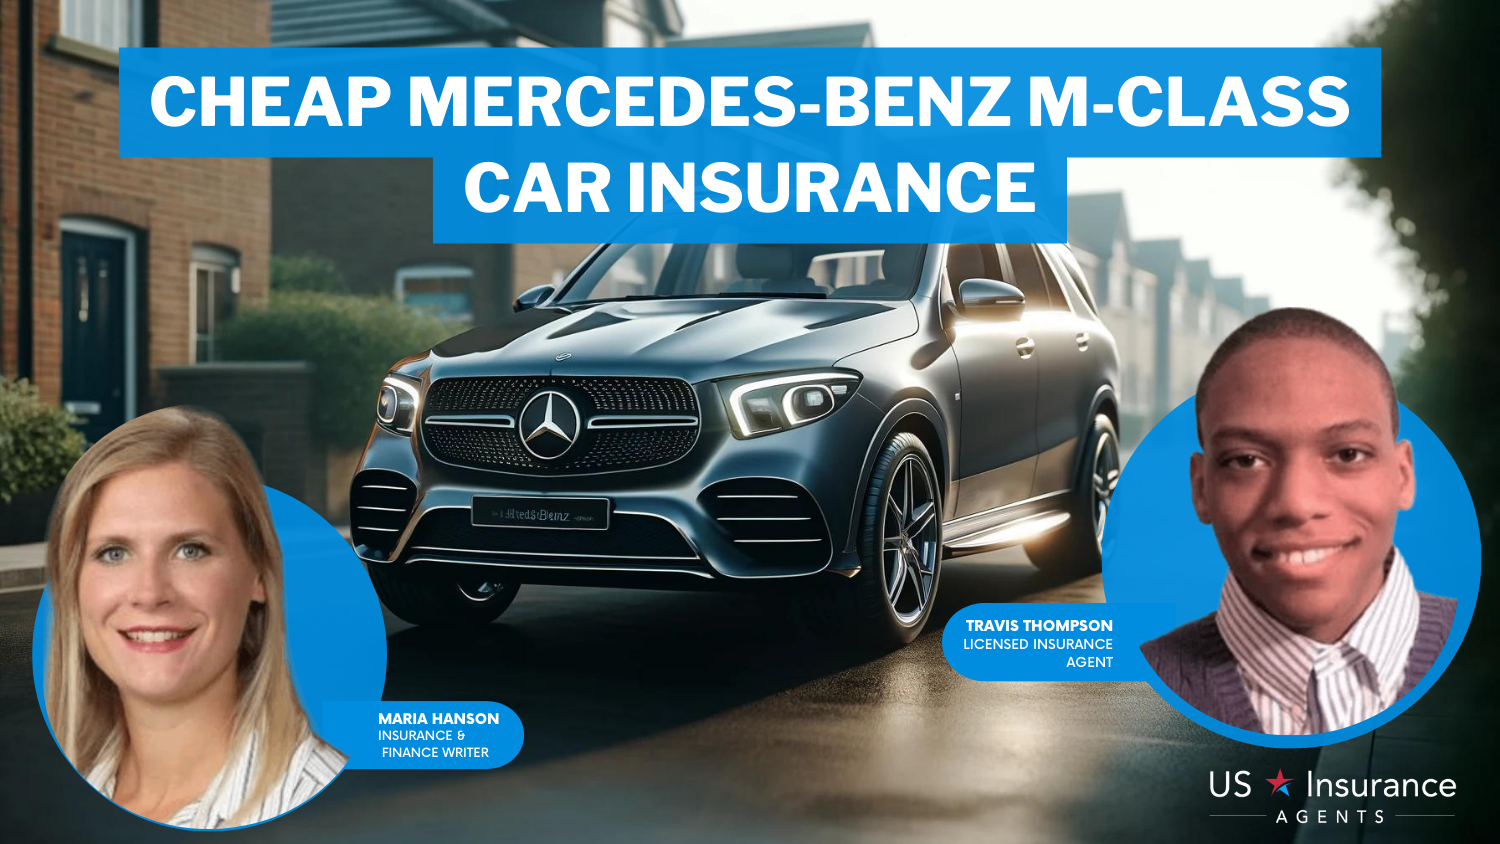 Progressive, USAA and Nationwide: Cheap Mercedes-Benz M-Class Car Insurance